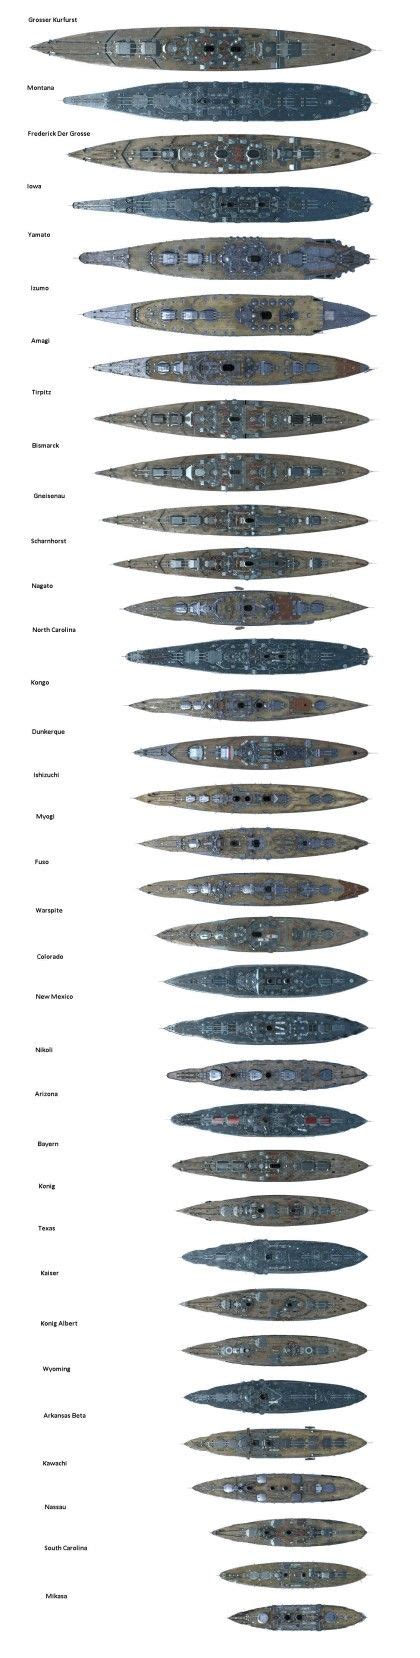 Ww2 Battleship Size Comparison Chart